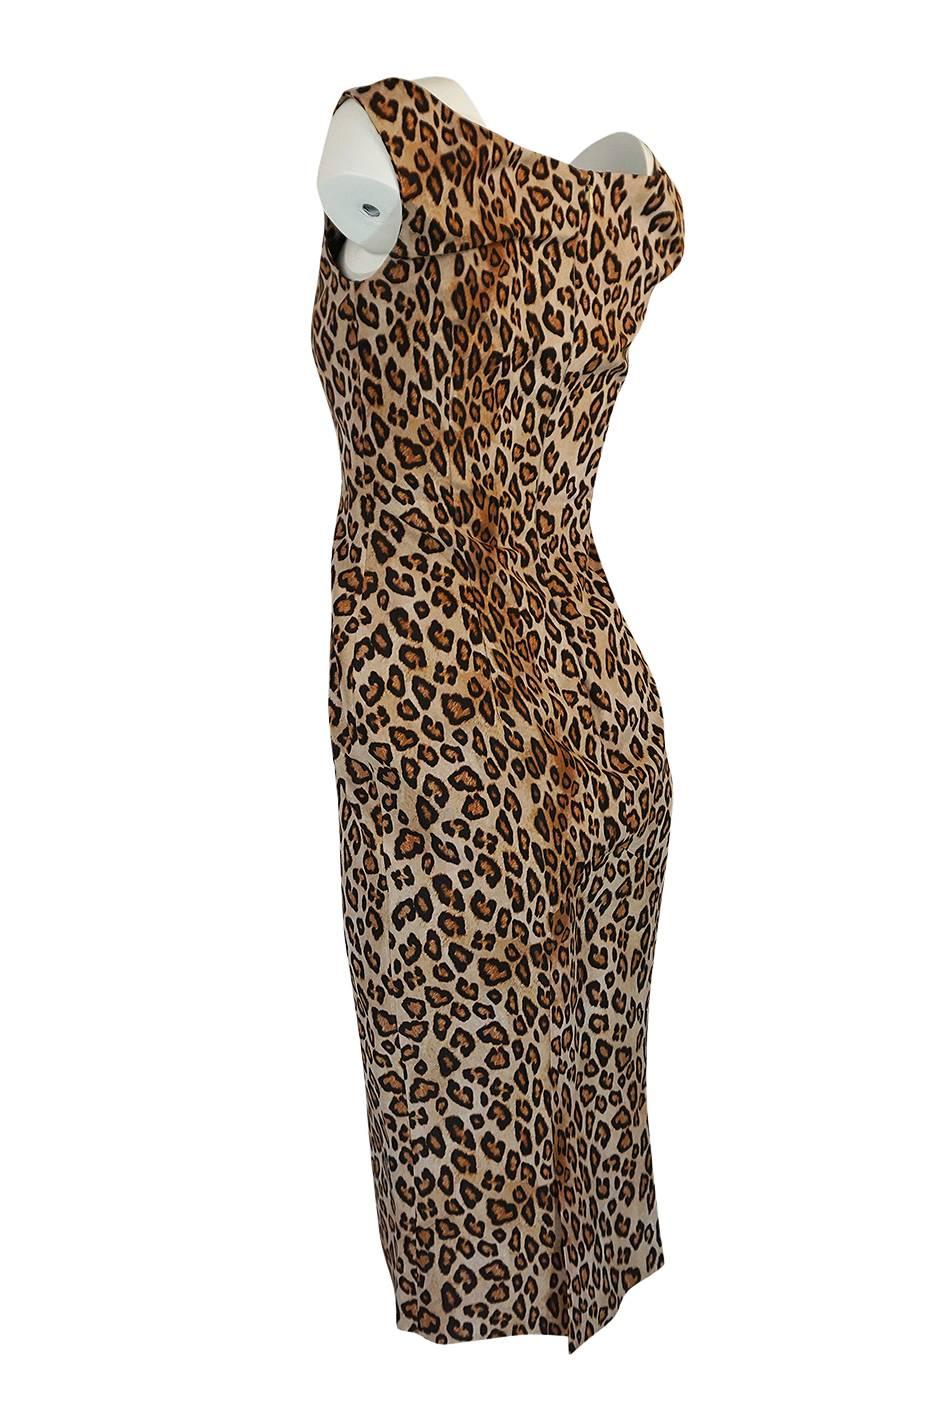 Women's F/W 2005 Alexander McQueen Runway Leopard Print Dress